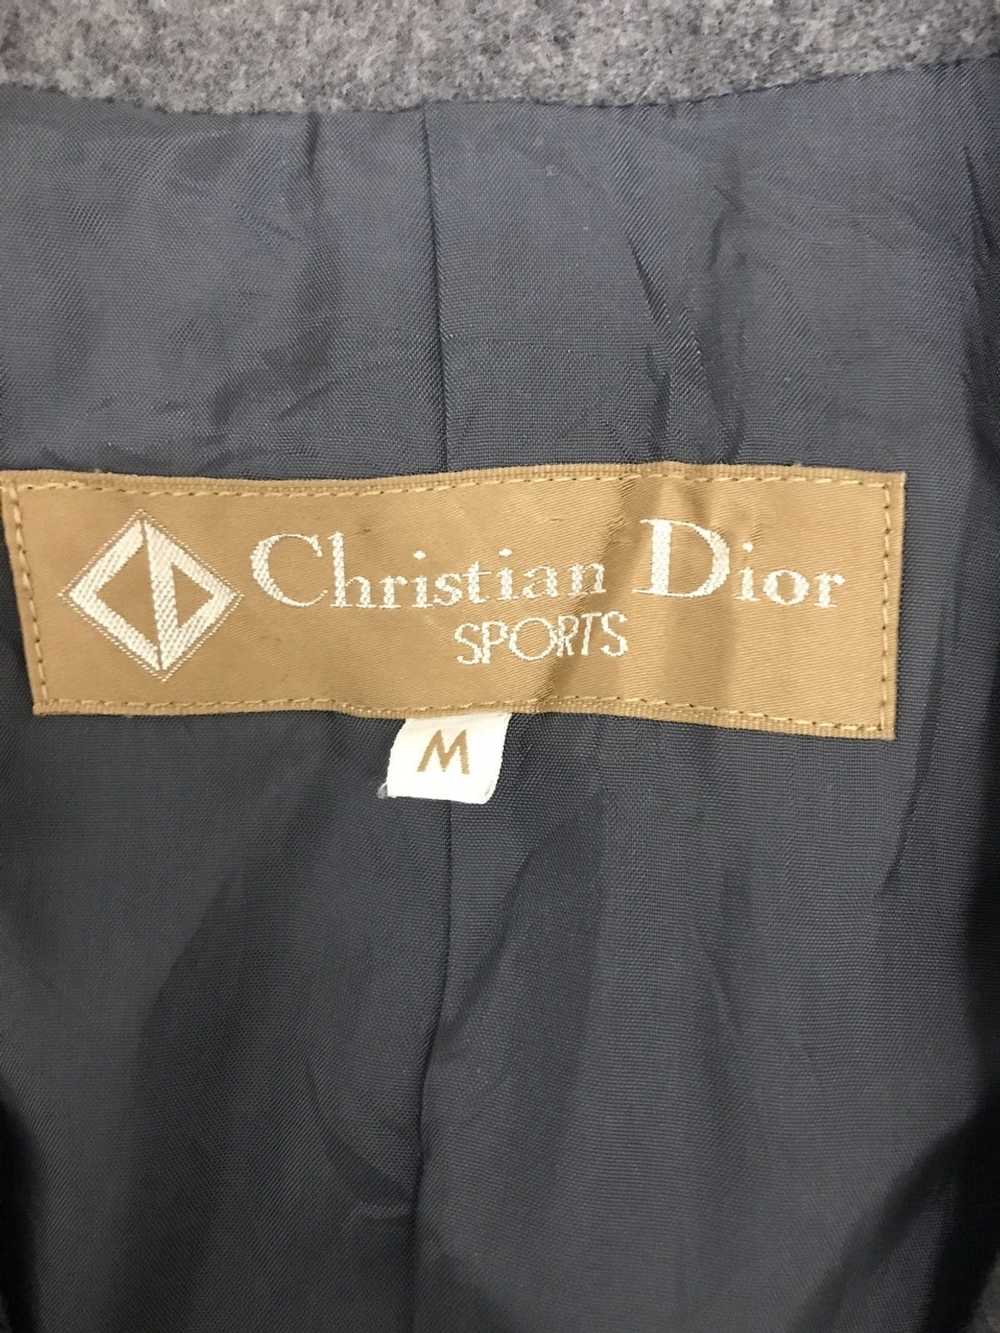 Christian Dior Monsieur Christian Dior Sports Cas… - image 9